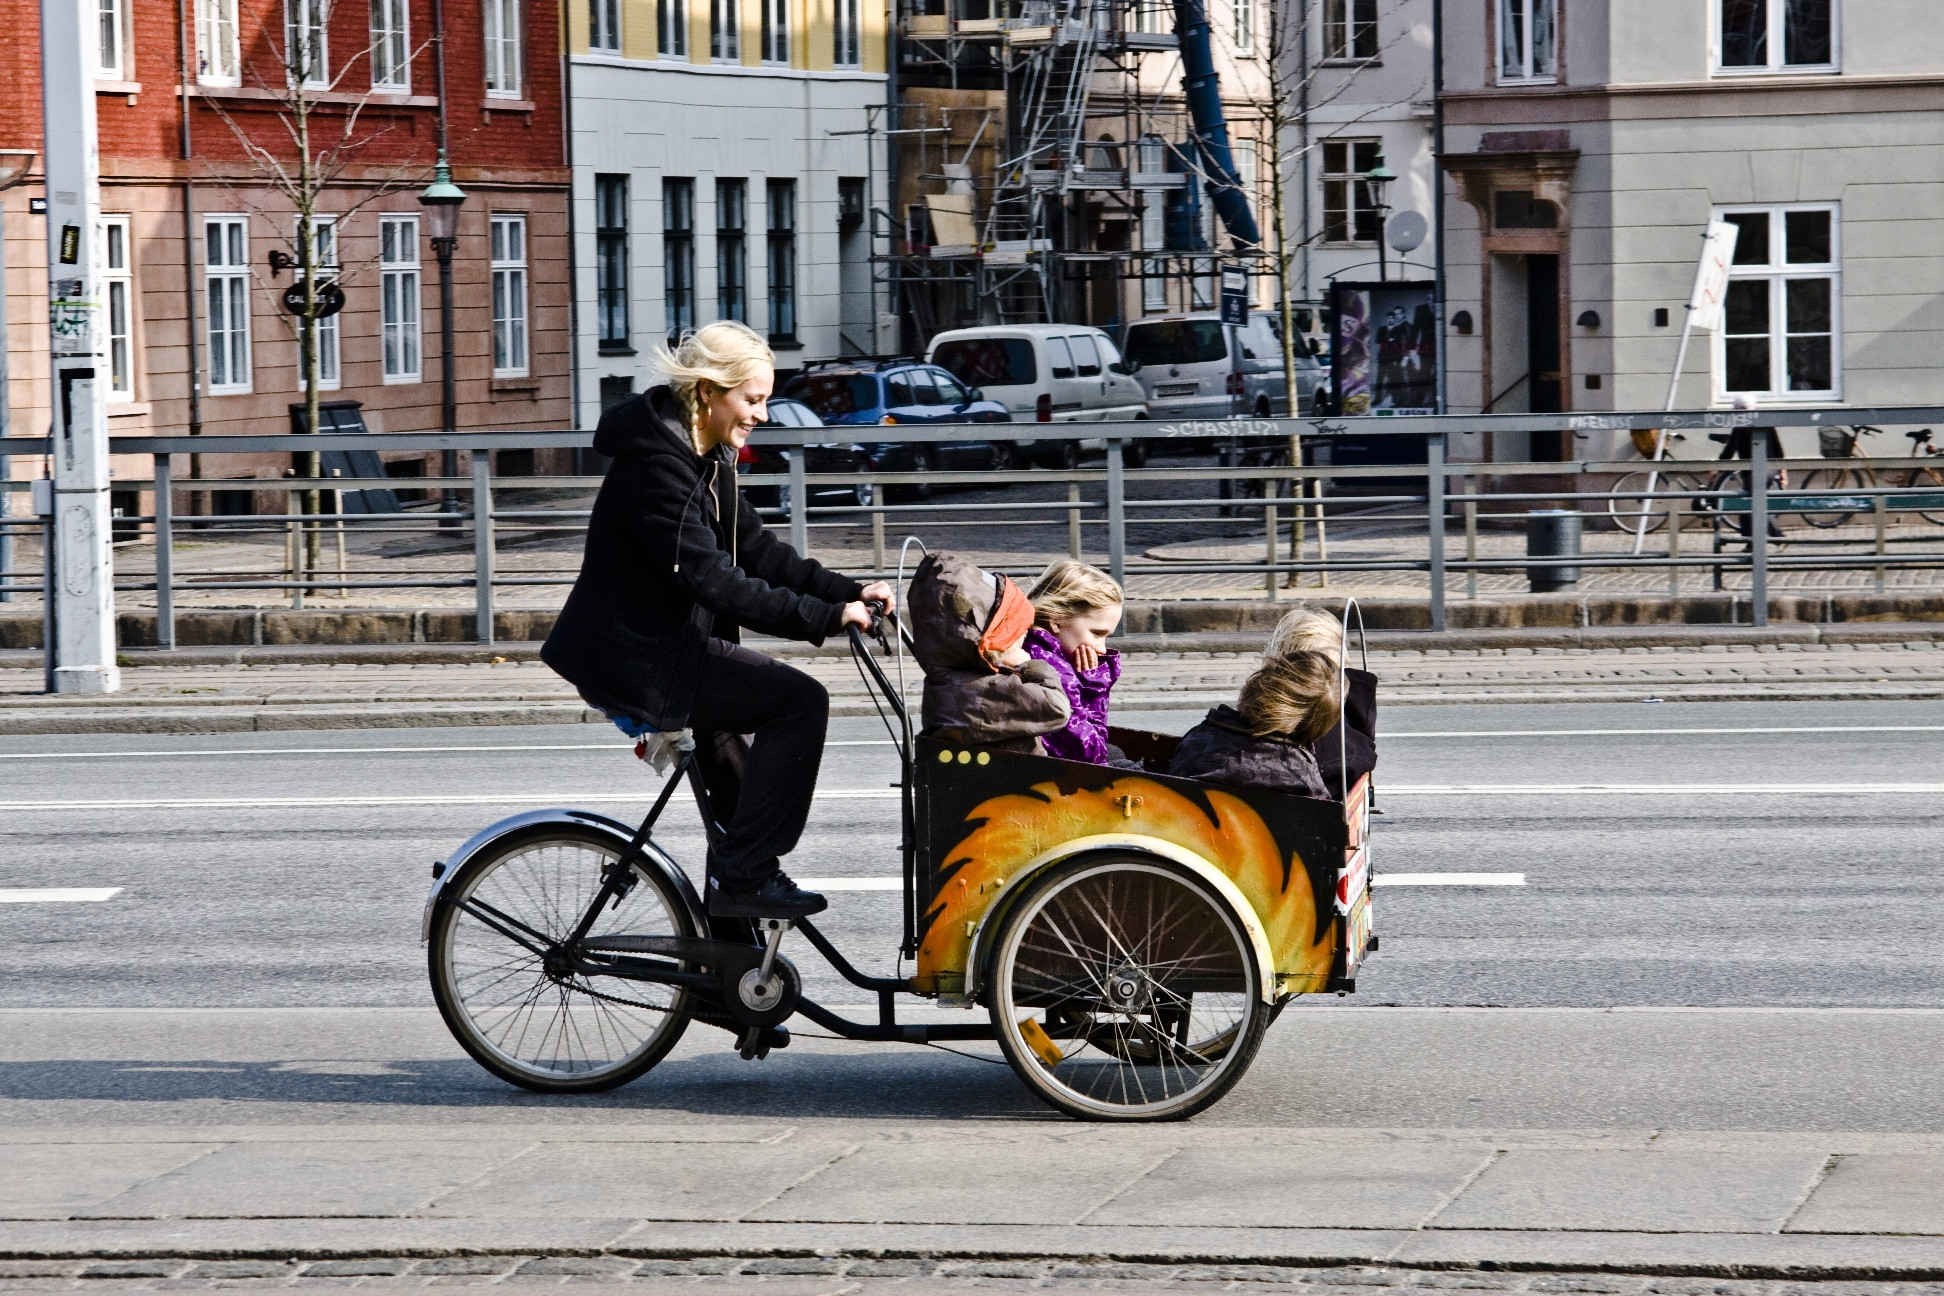 Грузовой велосипед, Копенгаген, Дания. Фотография Франца-Мишеля Мельбина @Franz-Michael S. Mellbin